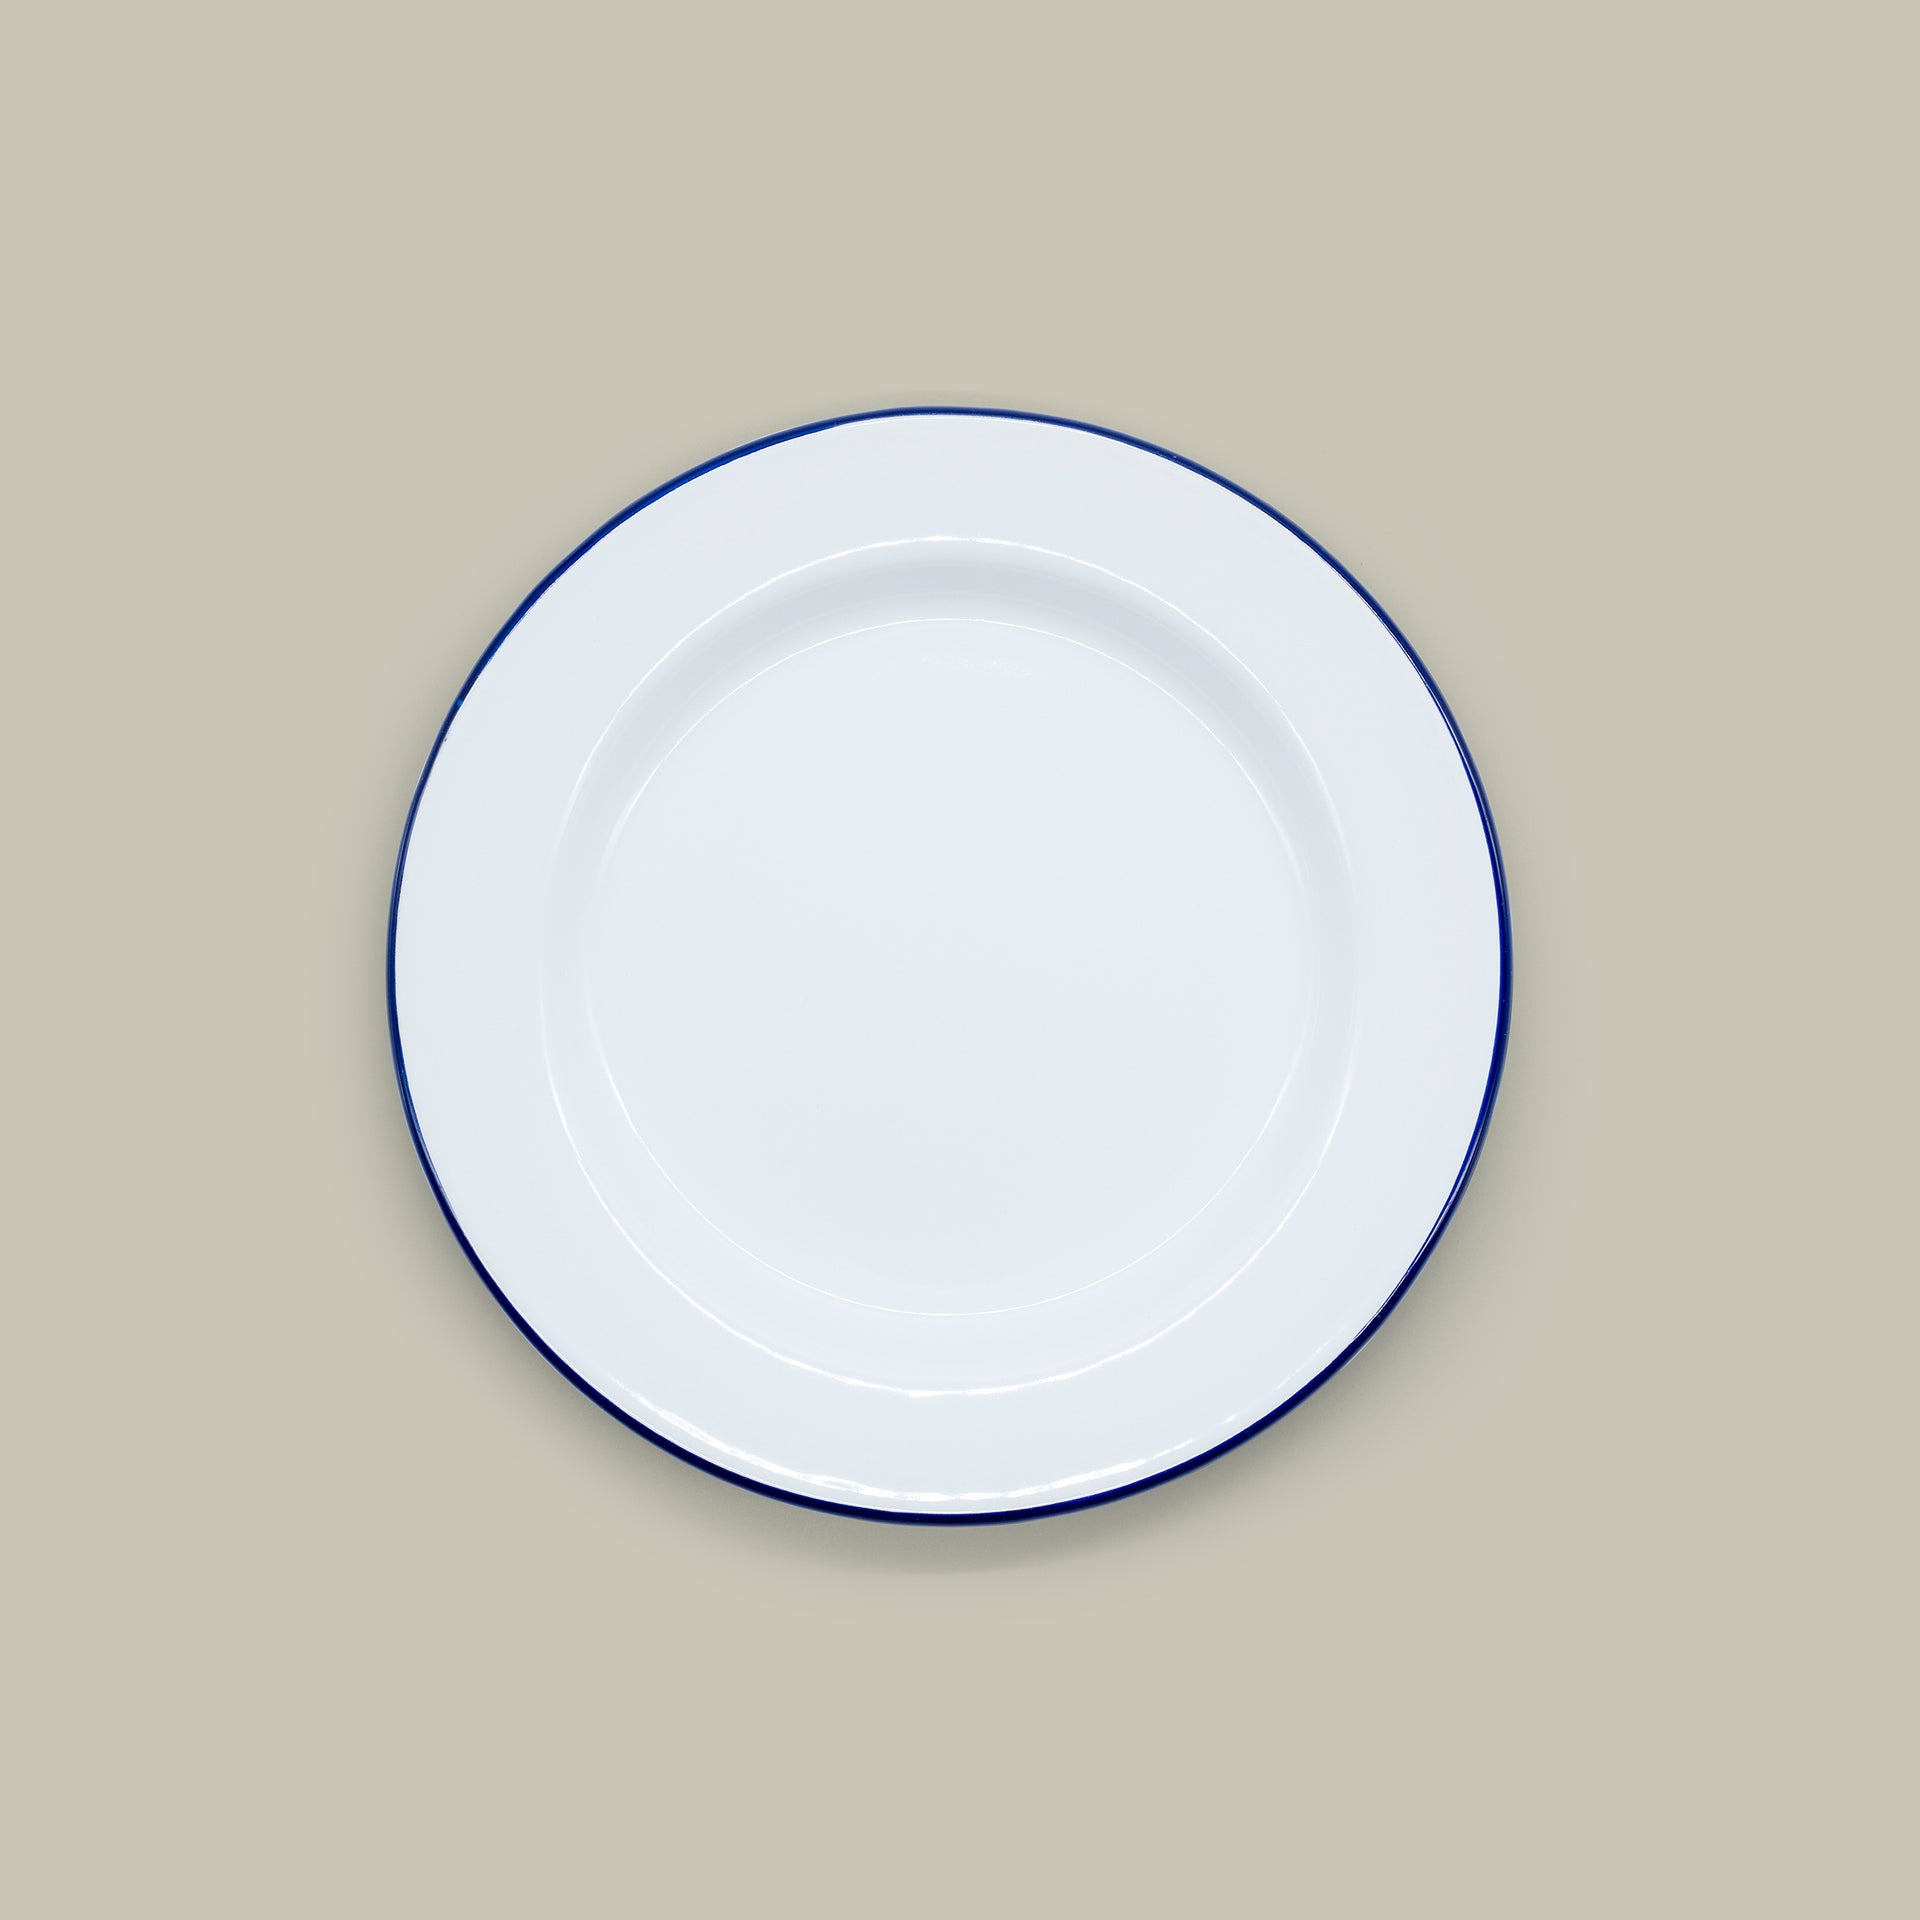 falcon 24cm plates - White with Blue rim